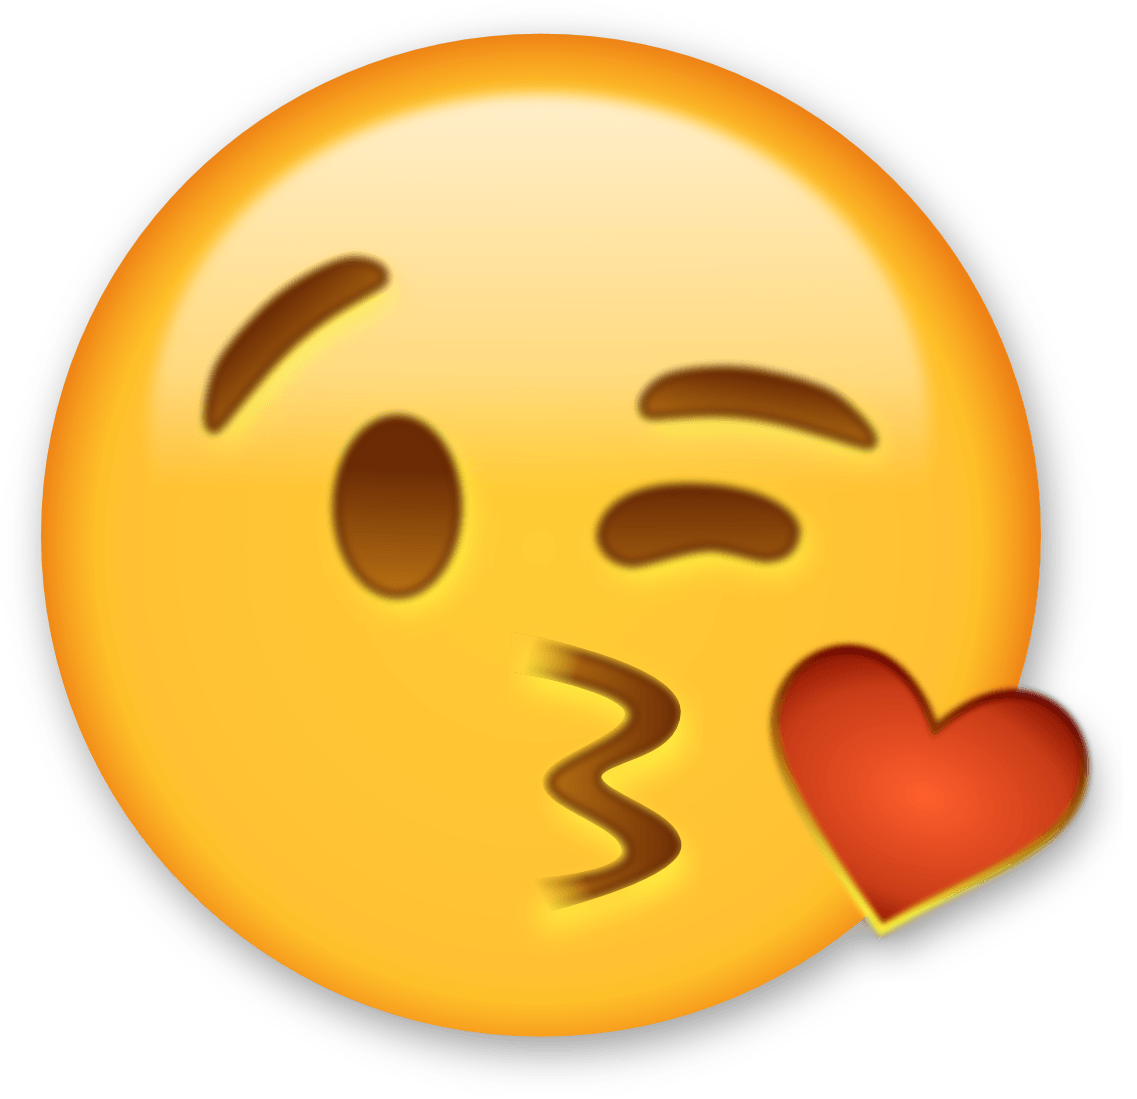 kissing emoji wallpaper